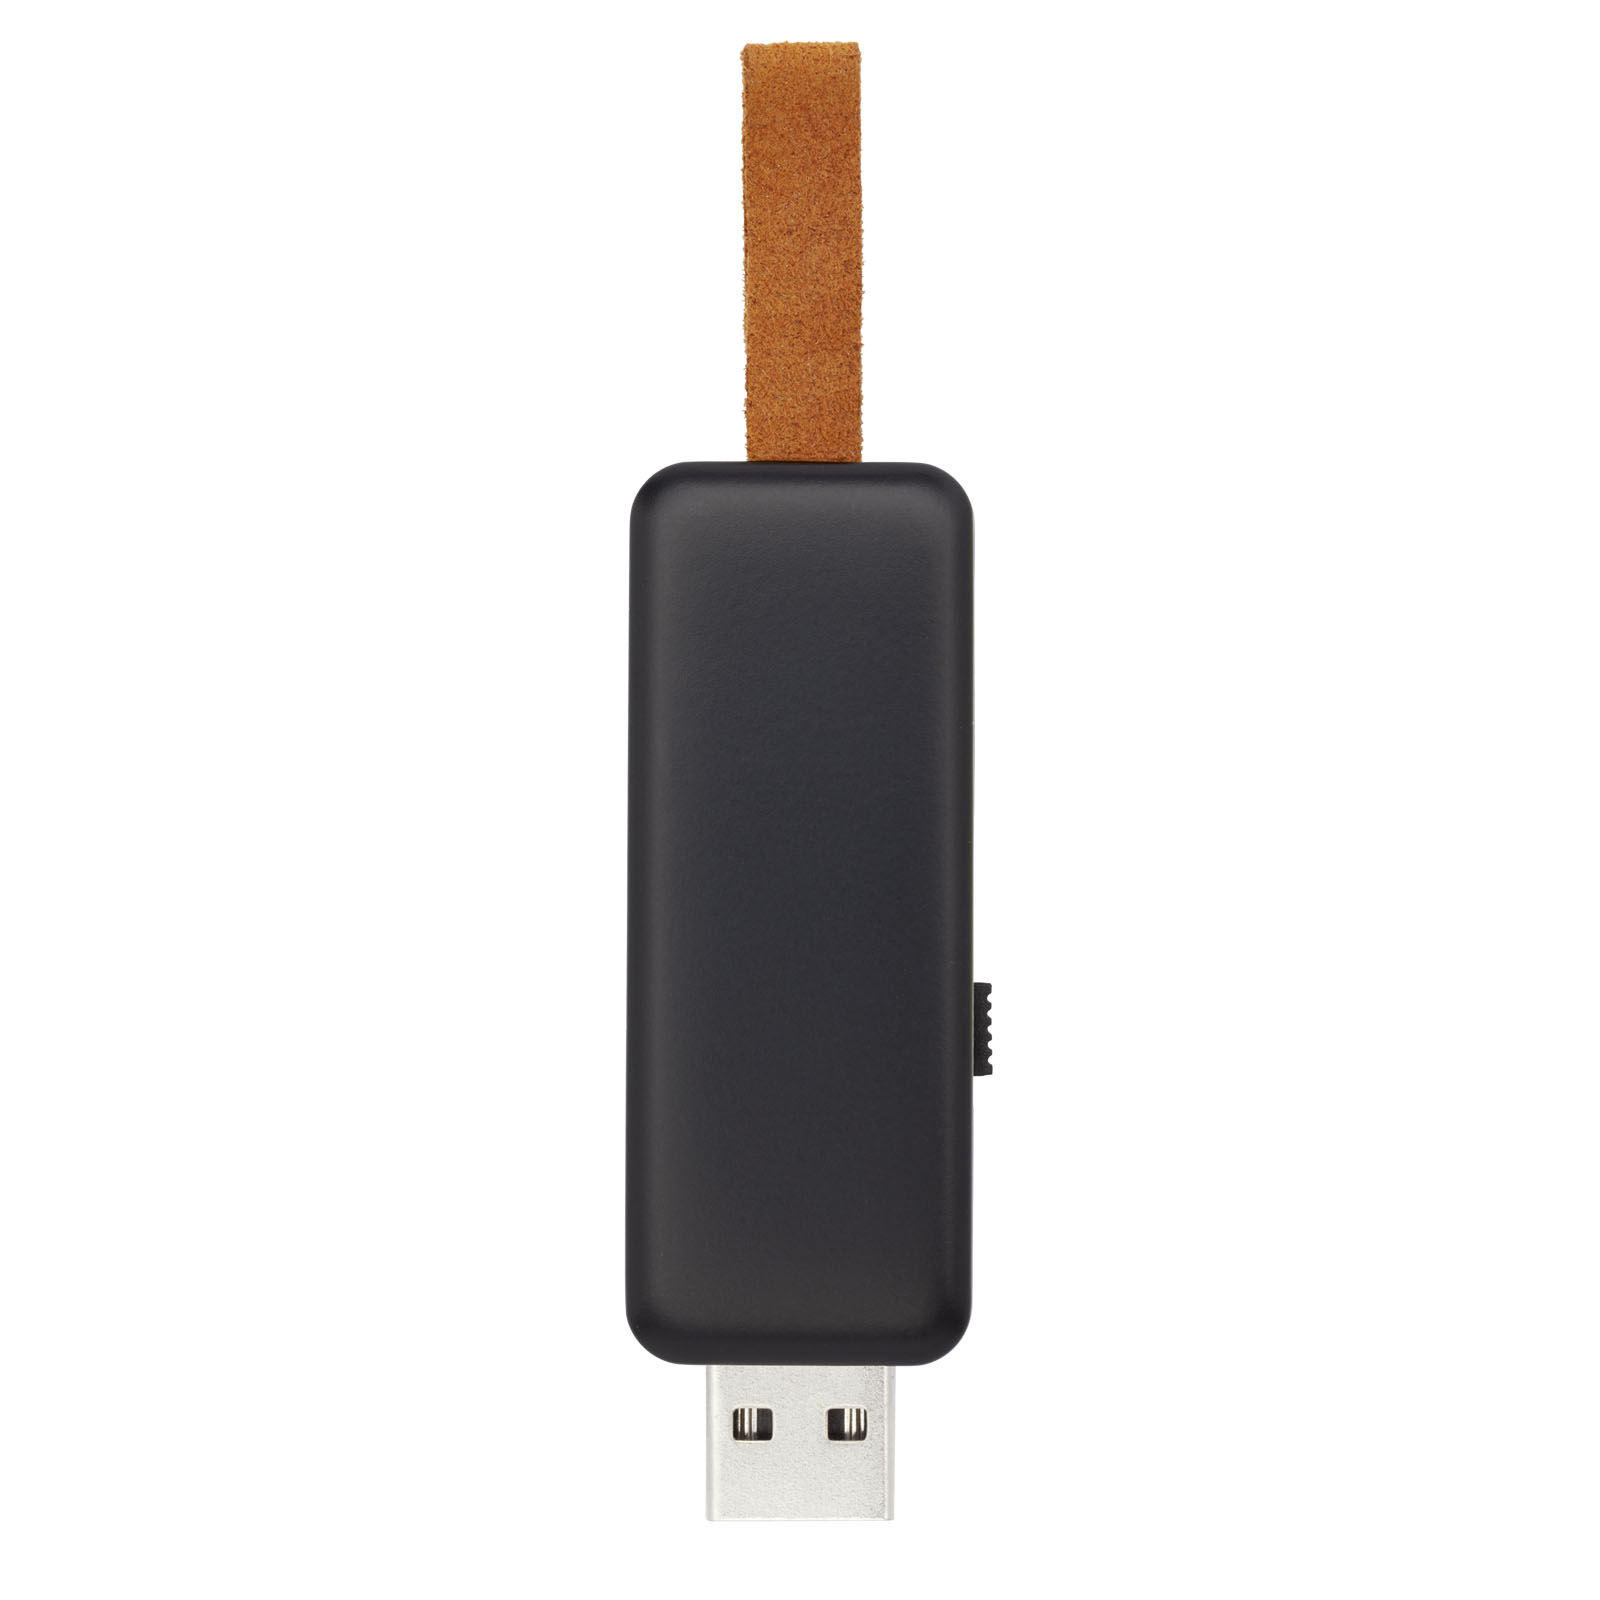 Clés USB publicitaires - Clé USB lumineuse Gleam 4 Go - 1